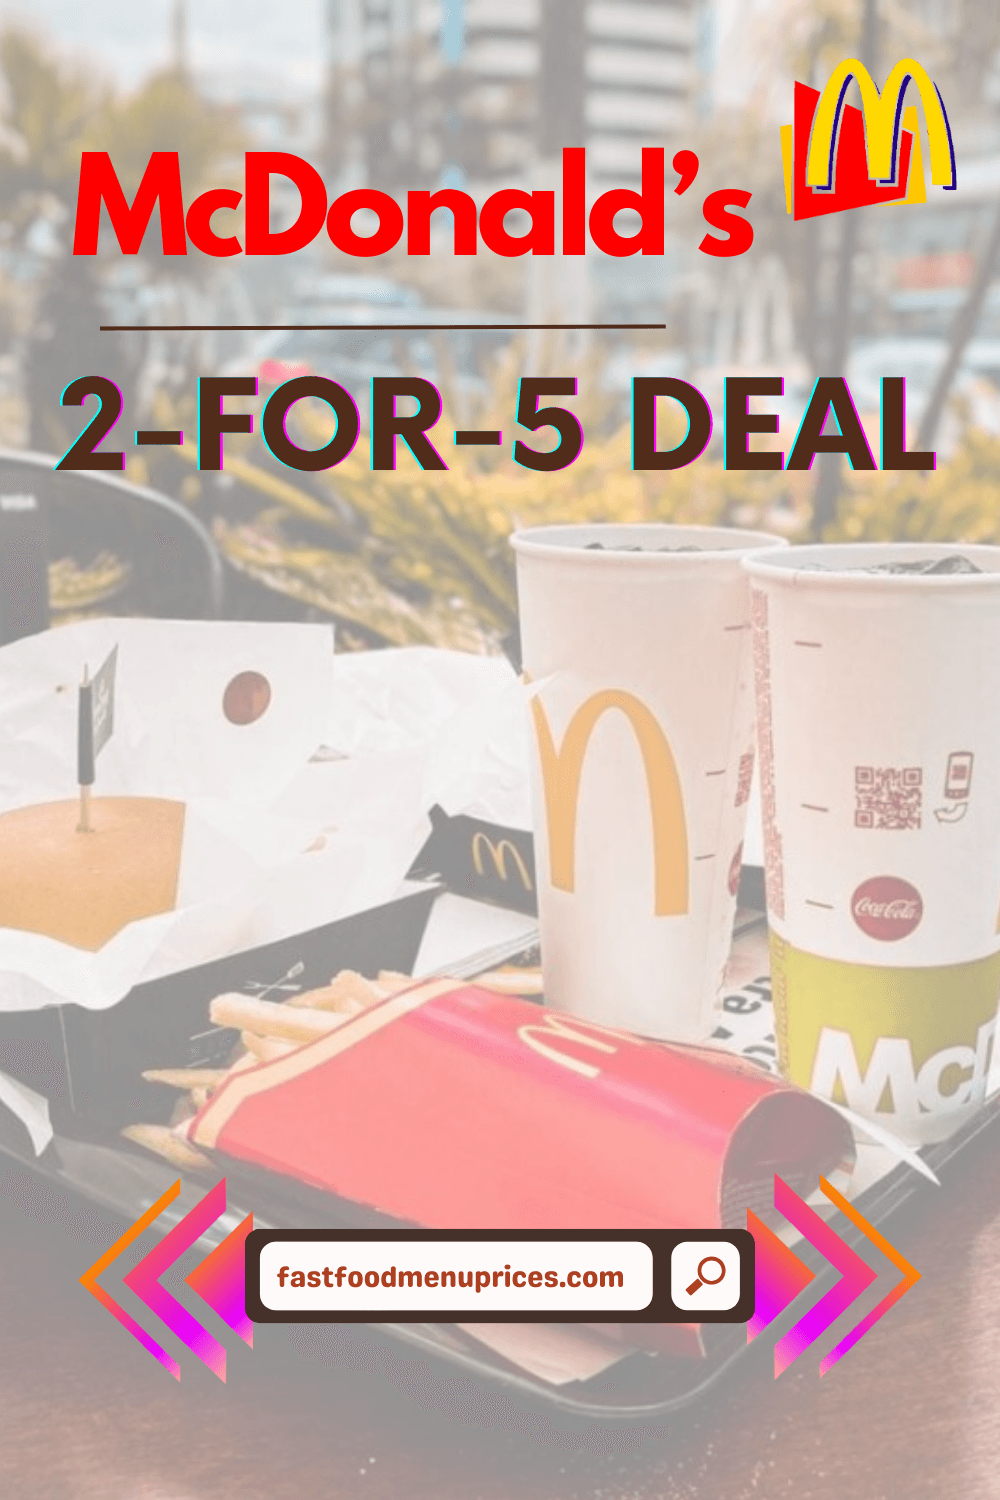 Enjoy McDonald's 2 for 5 deal, and don't forget to explore Raising Cane's secret menu.